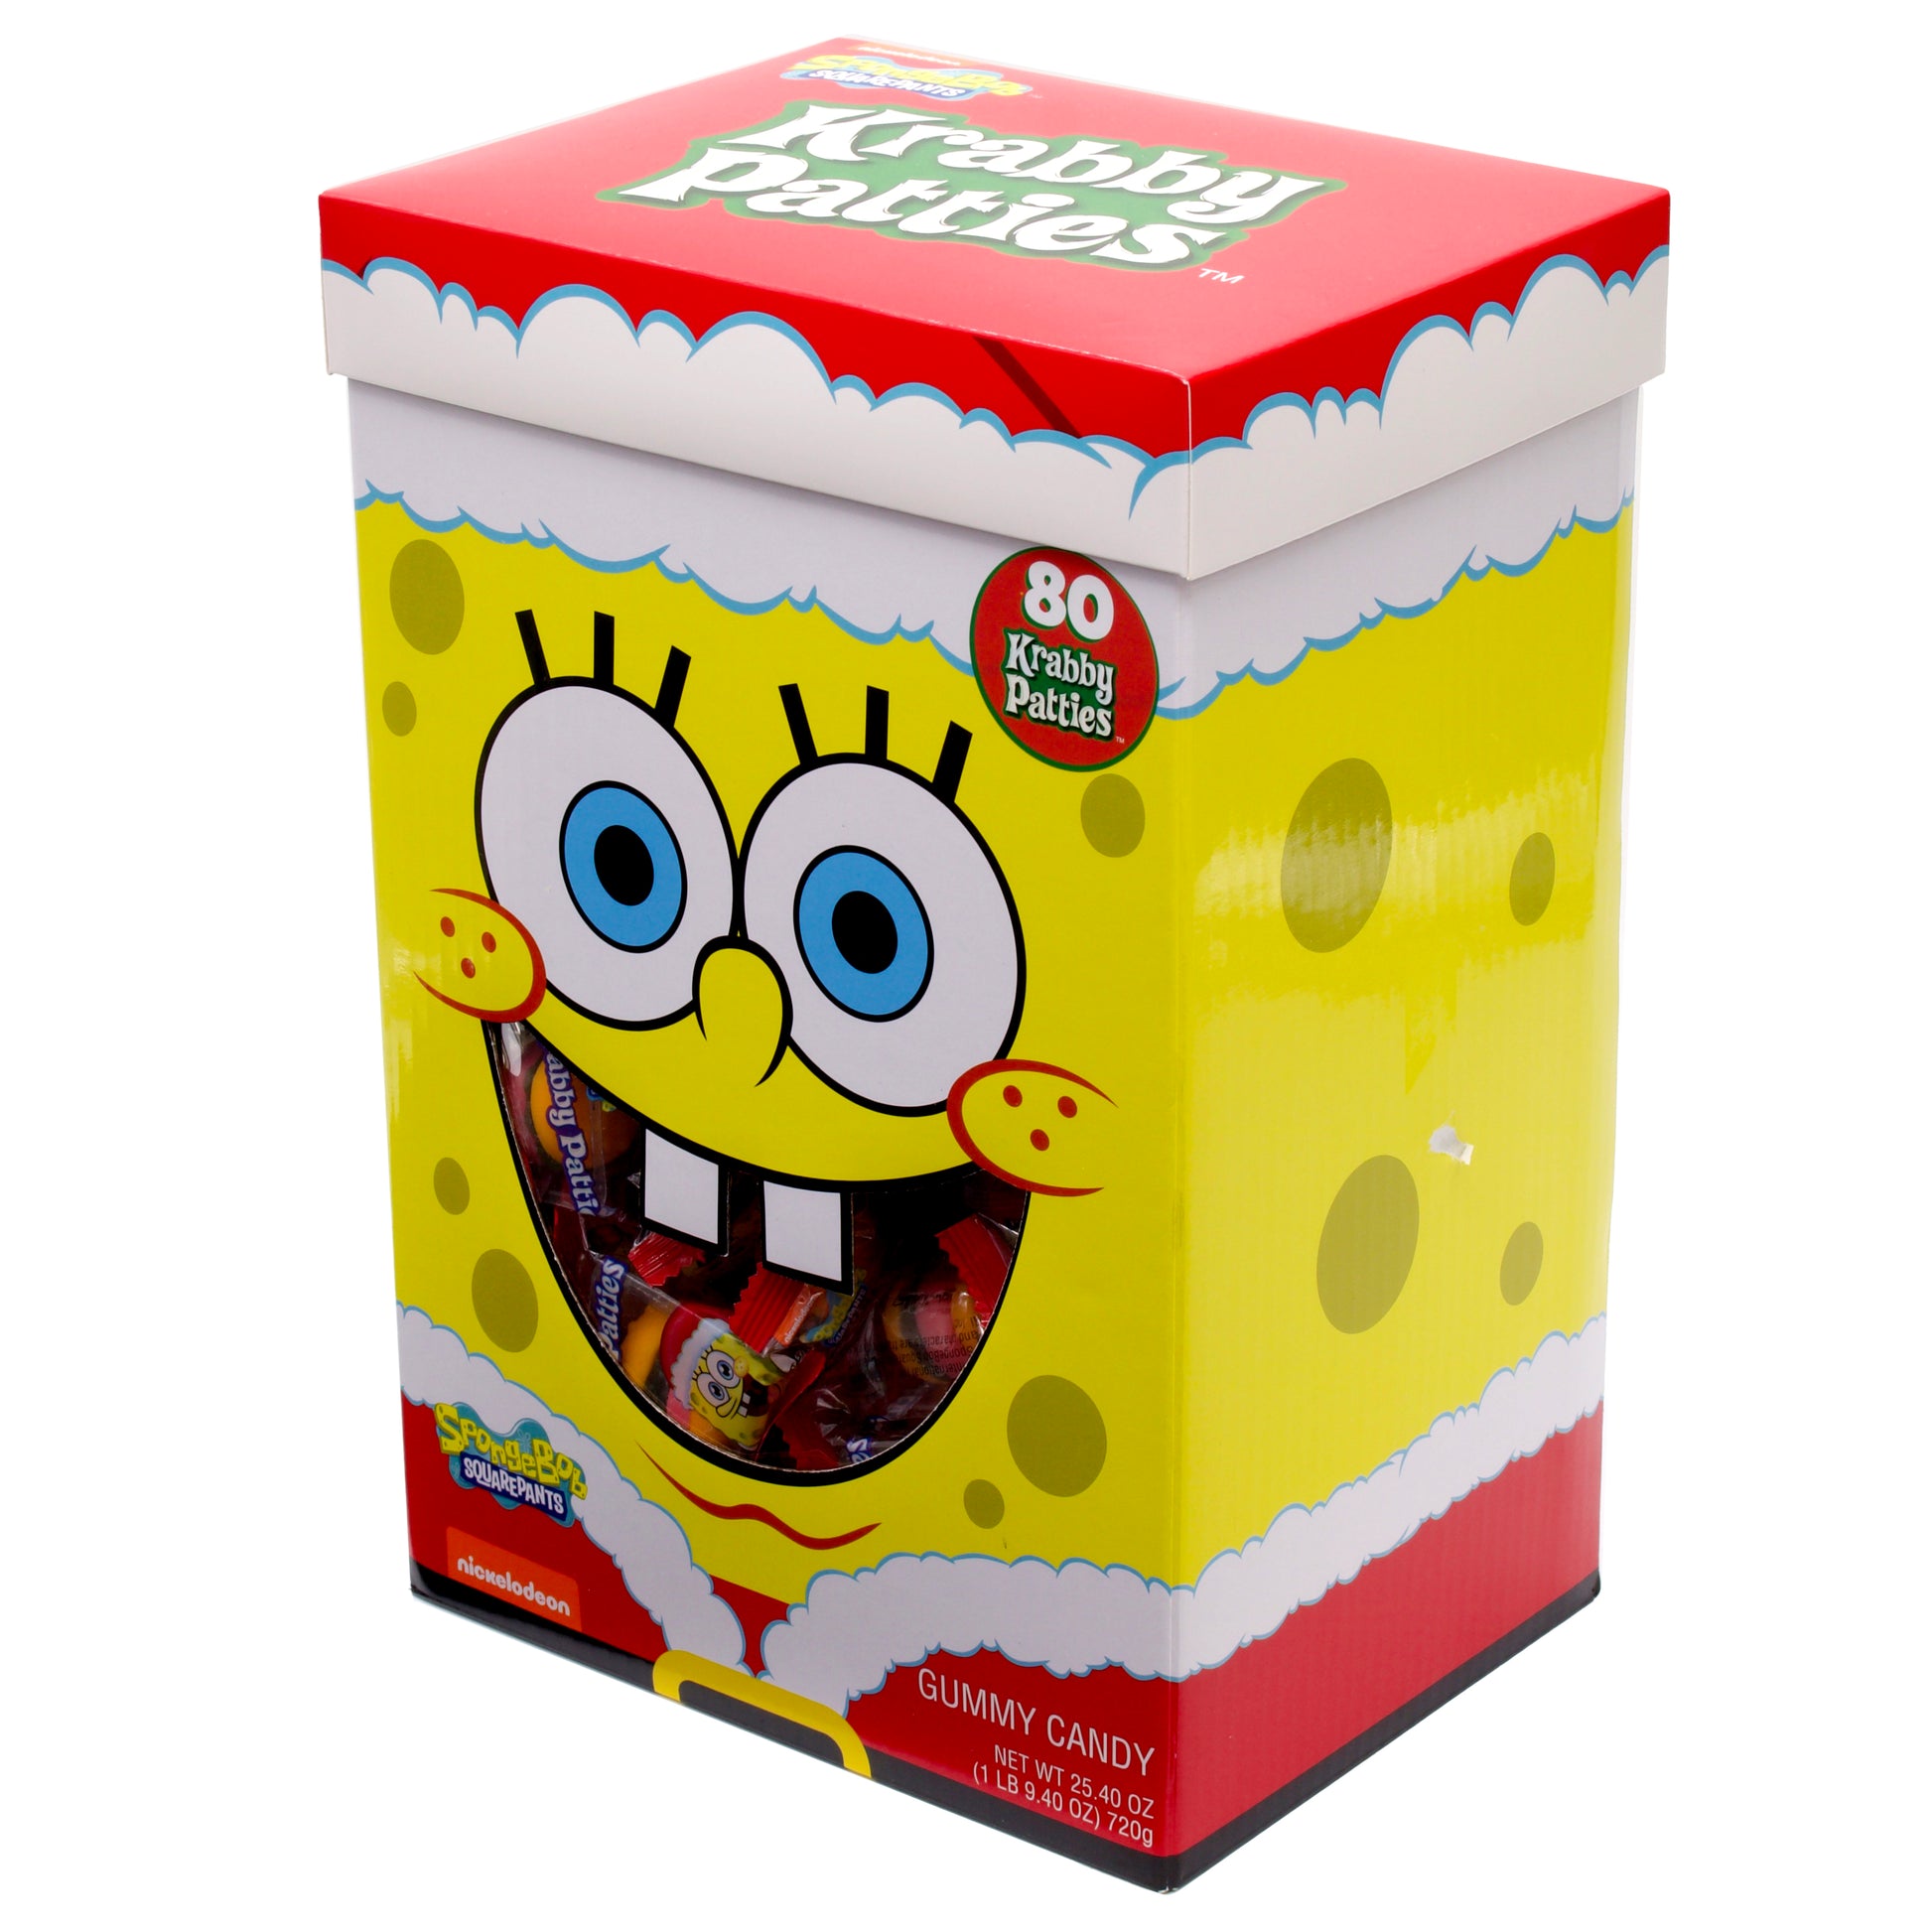 SpongeBob SquarePants Krabby Patties Santa Box, 80 Count